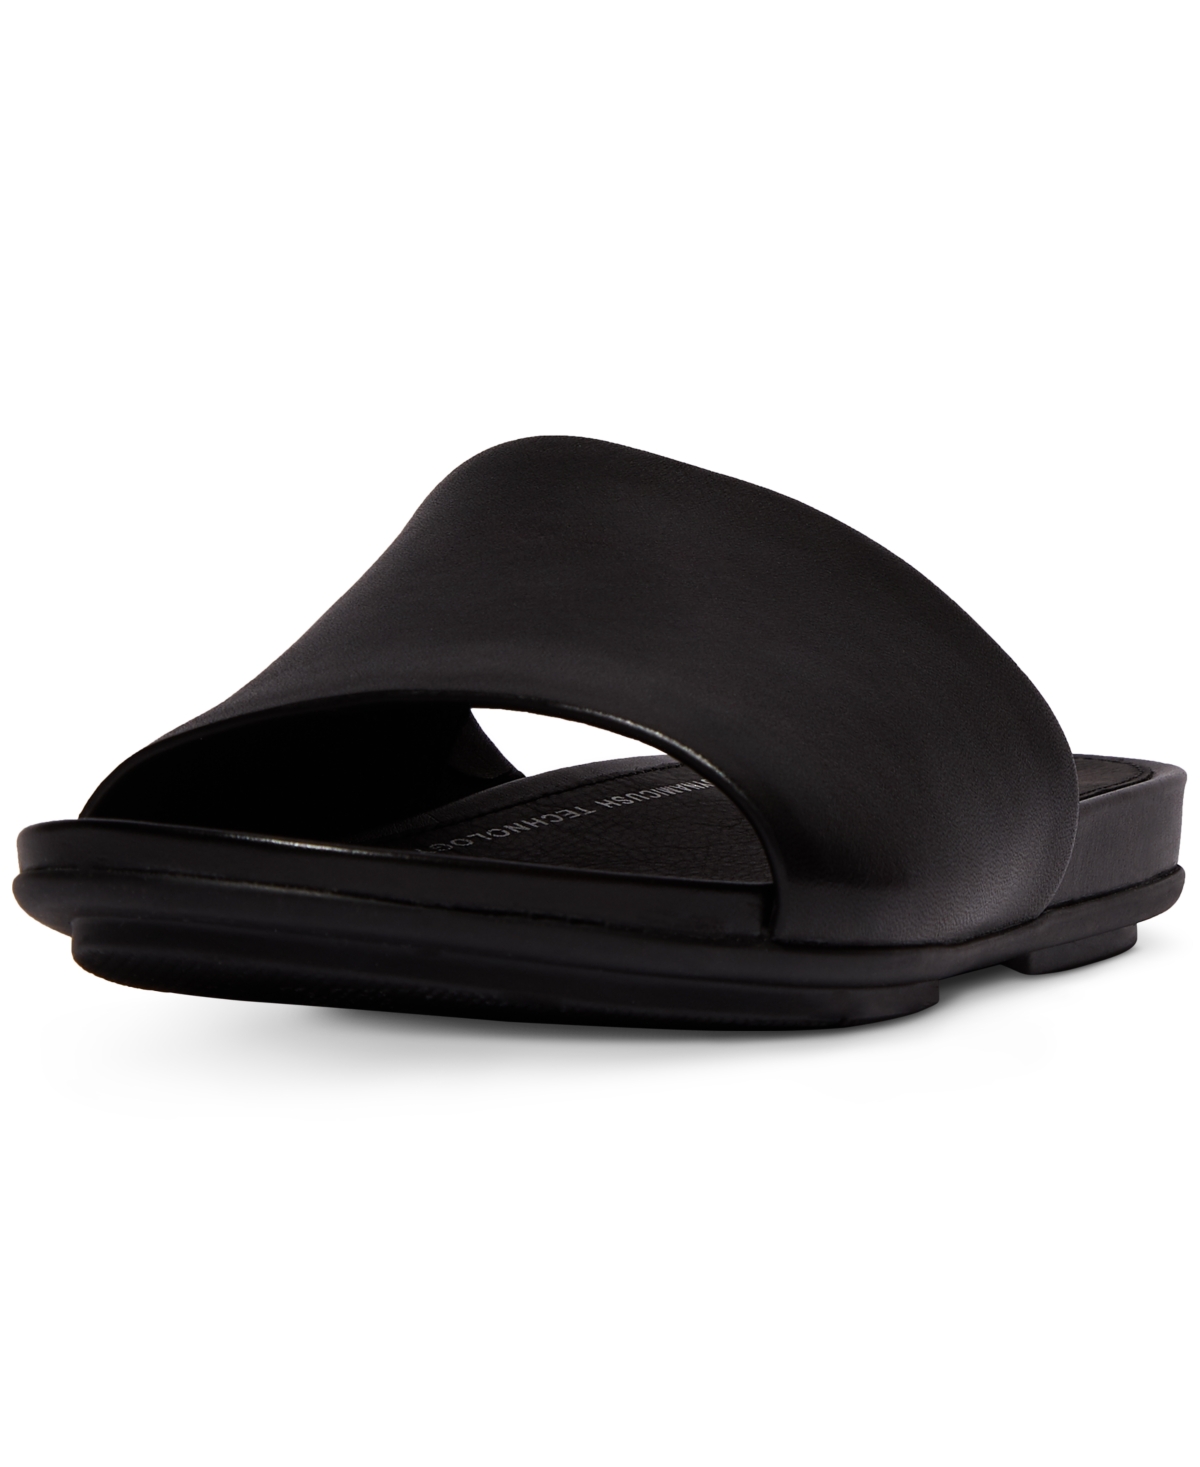 FitFlop Women's Gracie Pool Slide Sandals Women's Shoes